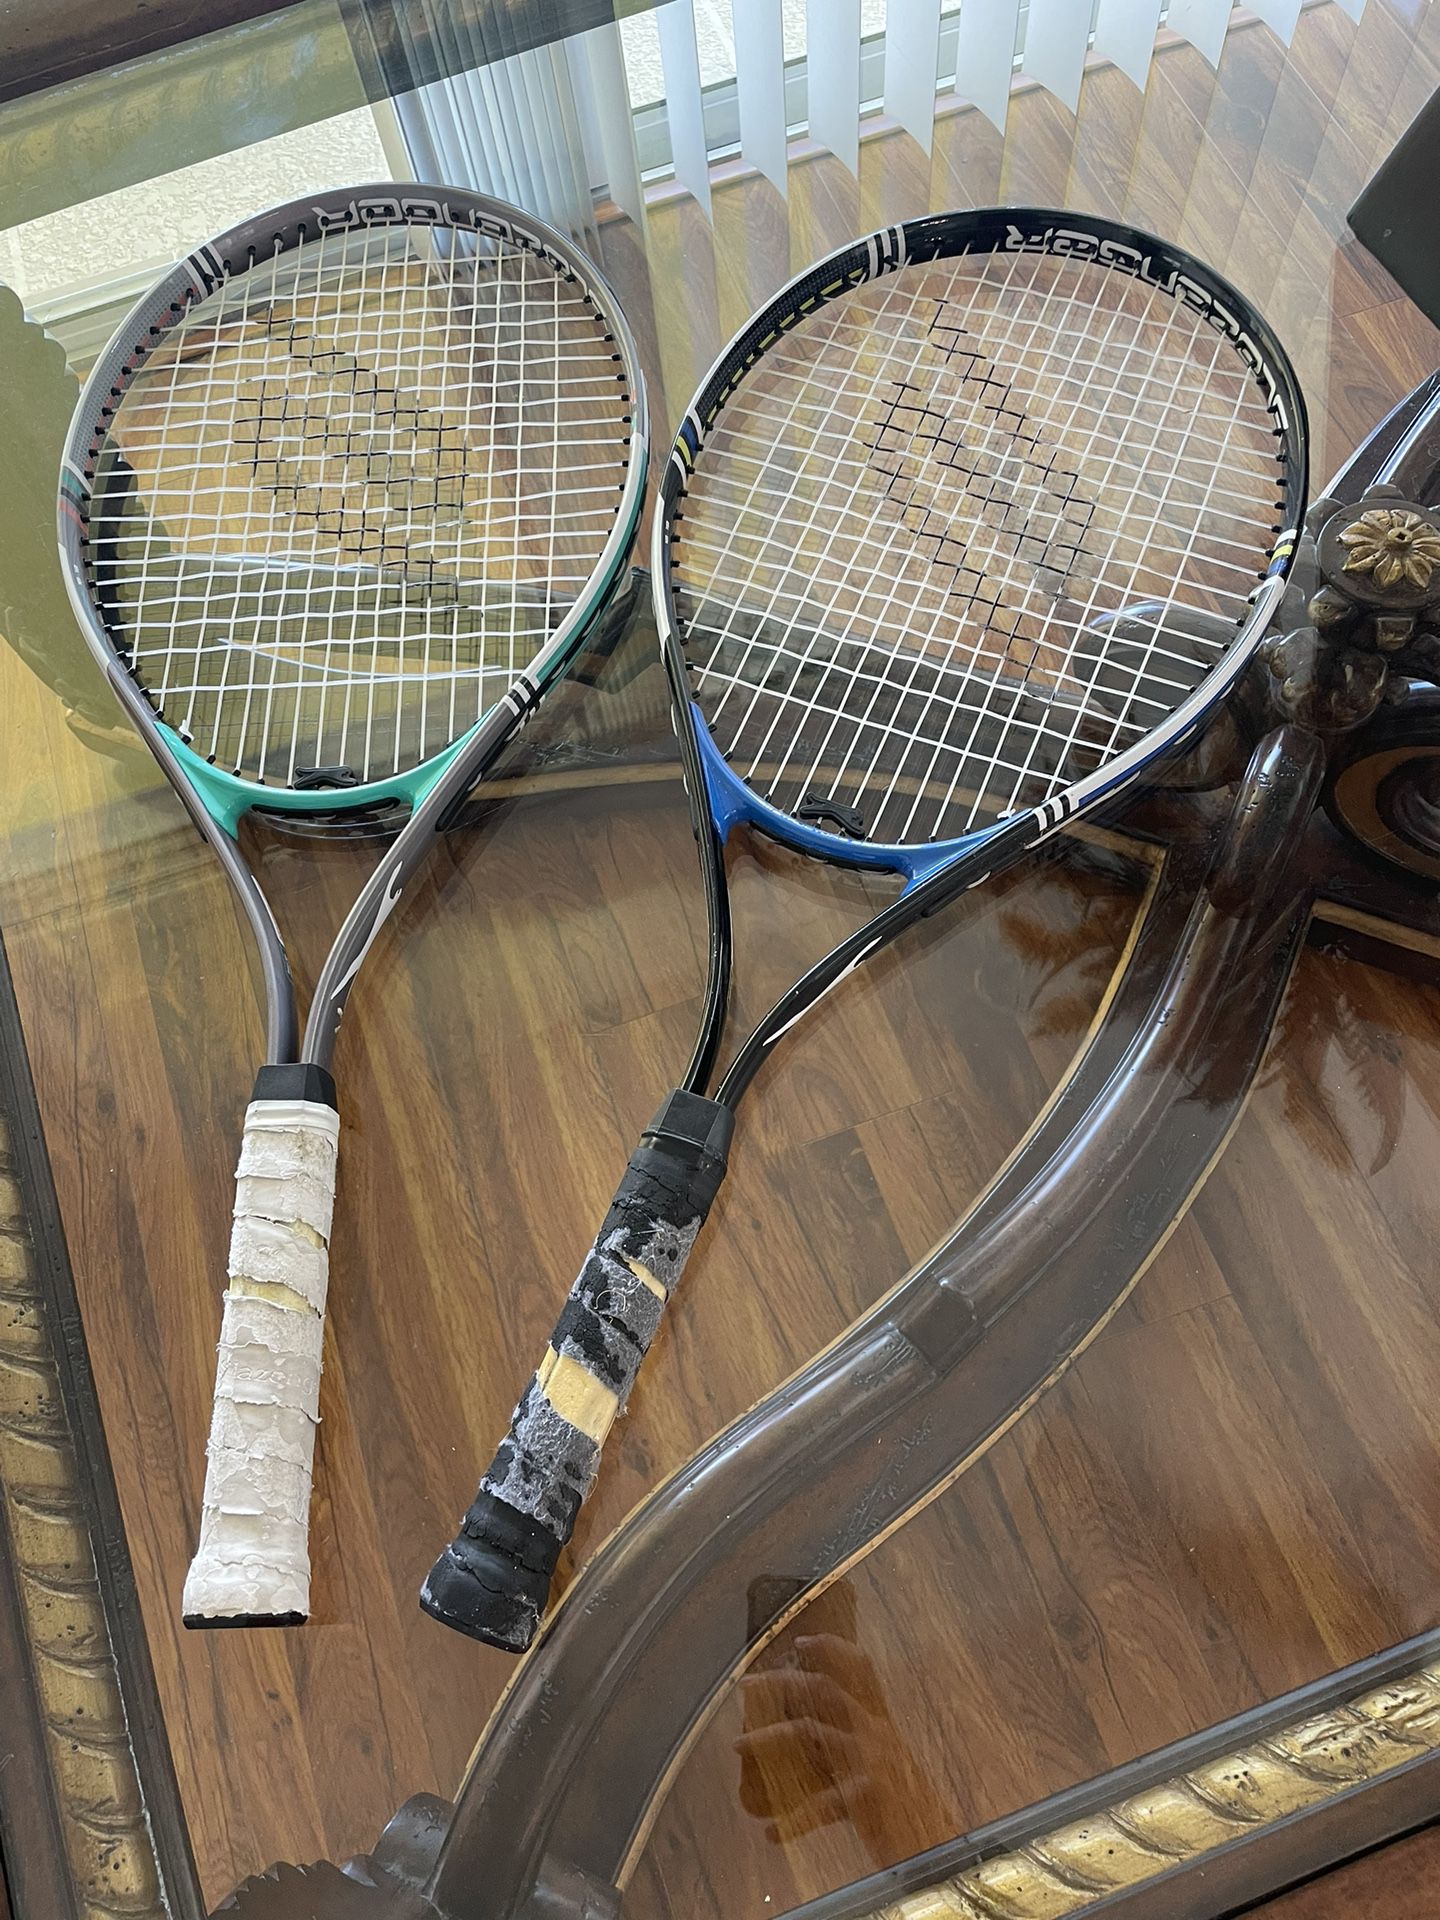 Pair Of Tennis Rackets 